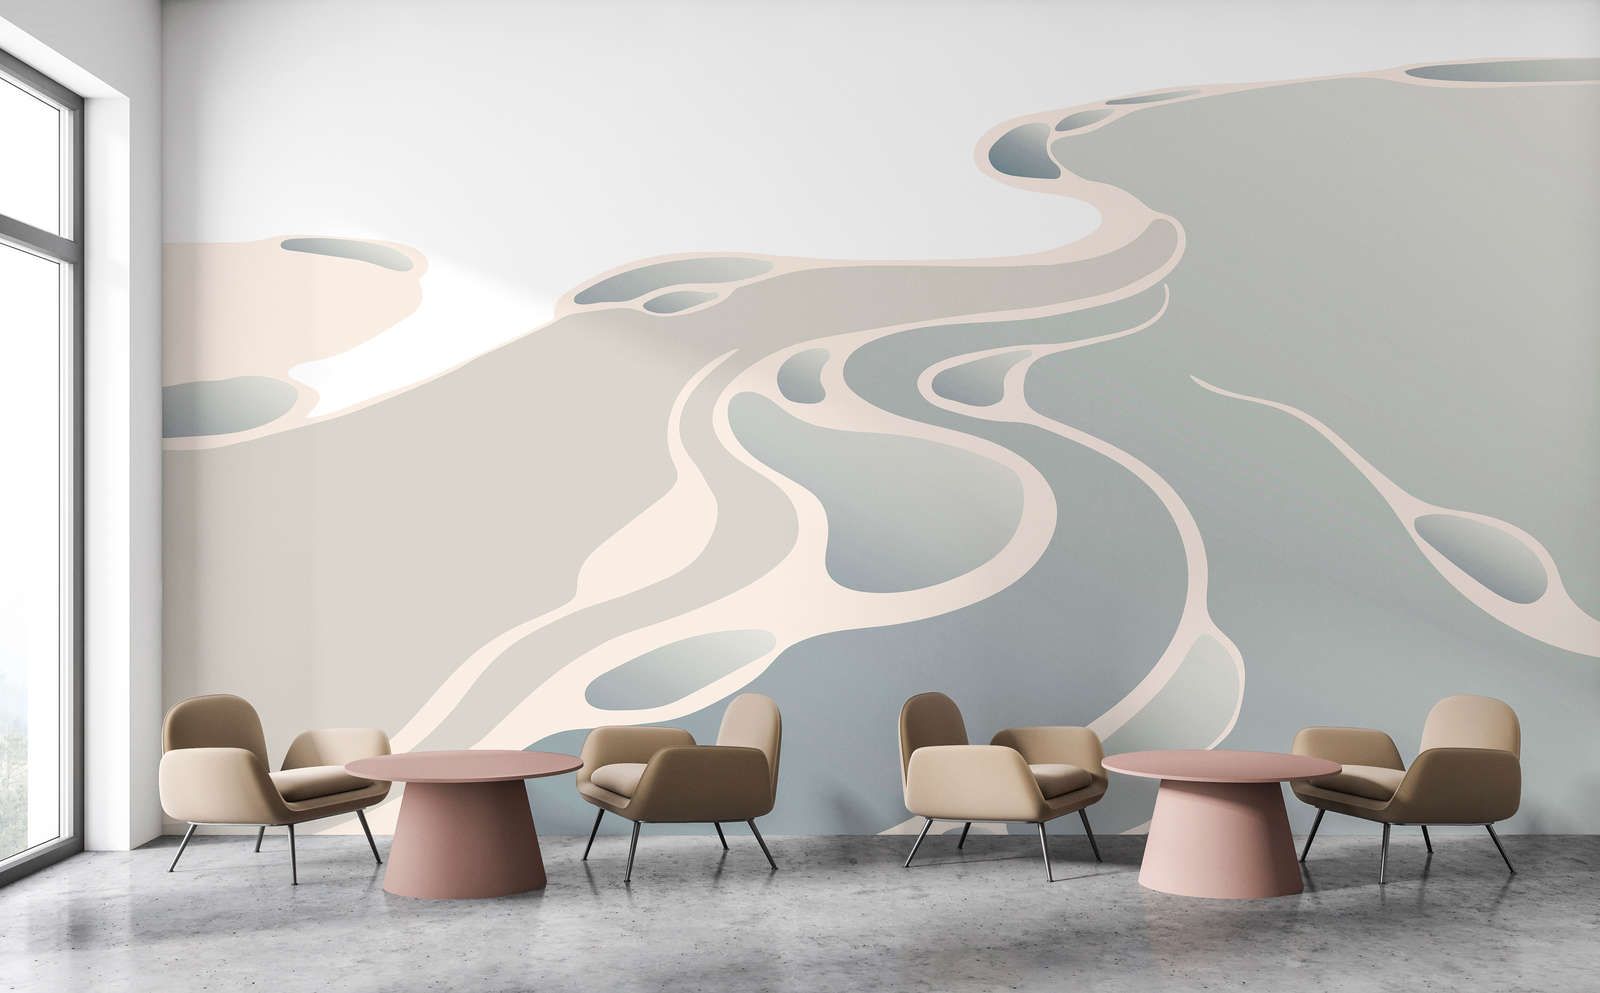             Photo wallpaper »delta« - Abstract desert landscape - Matt, Smooth non-woven fabric
        